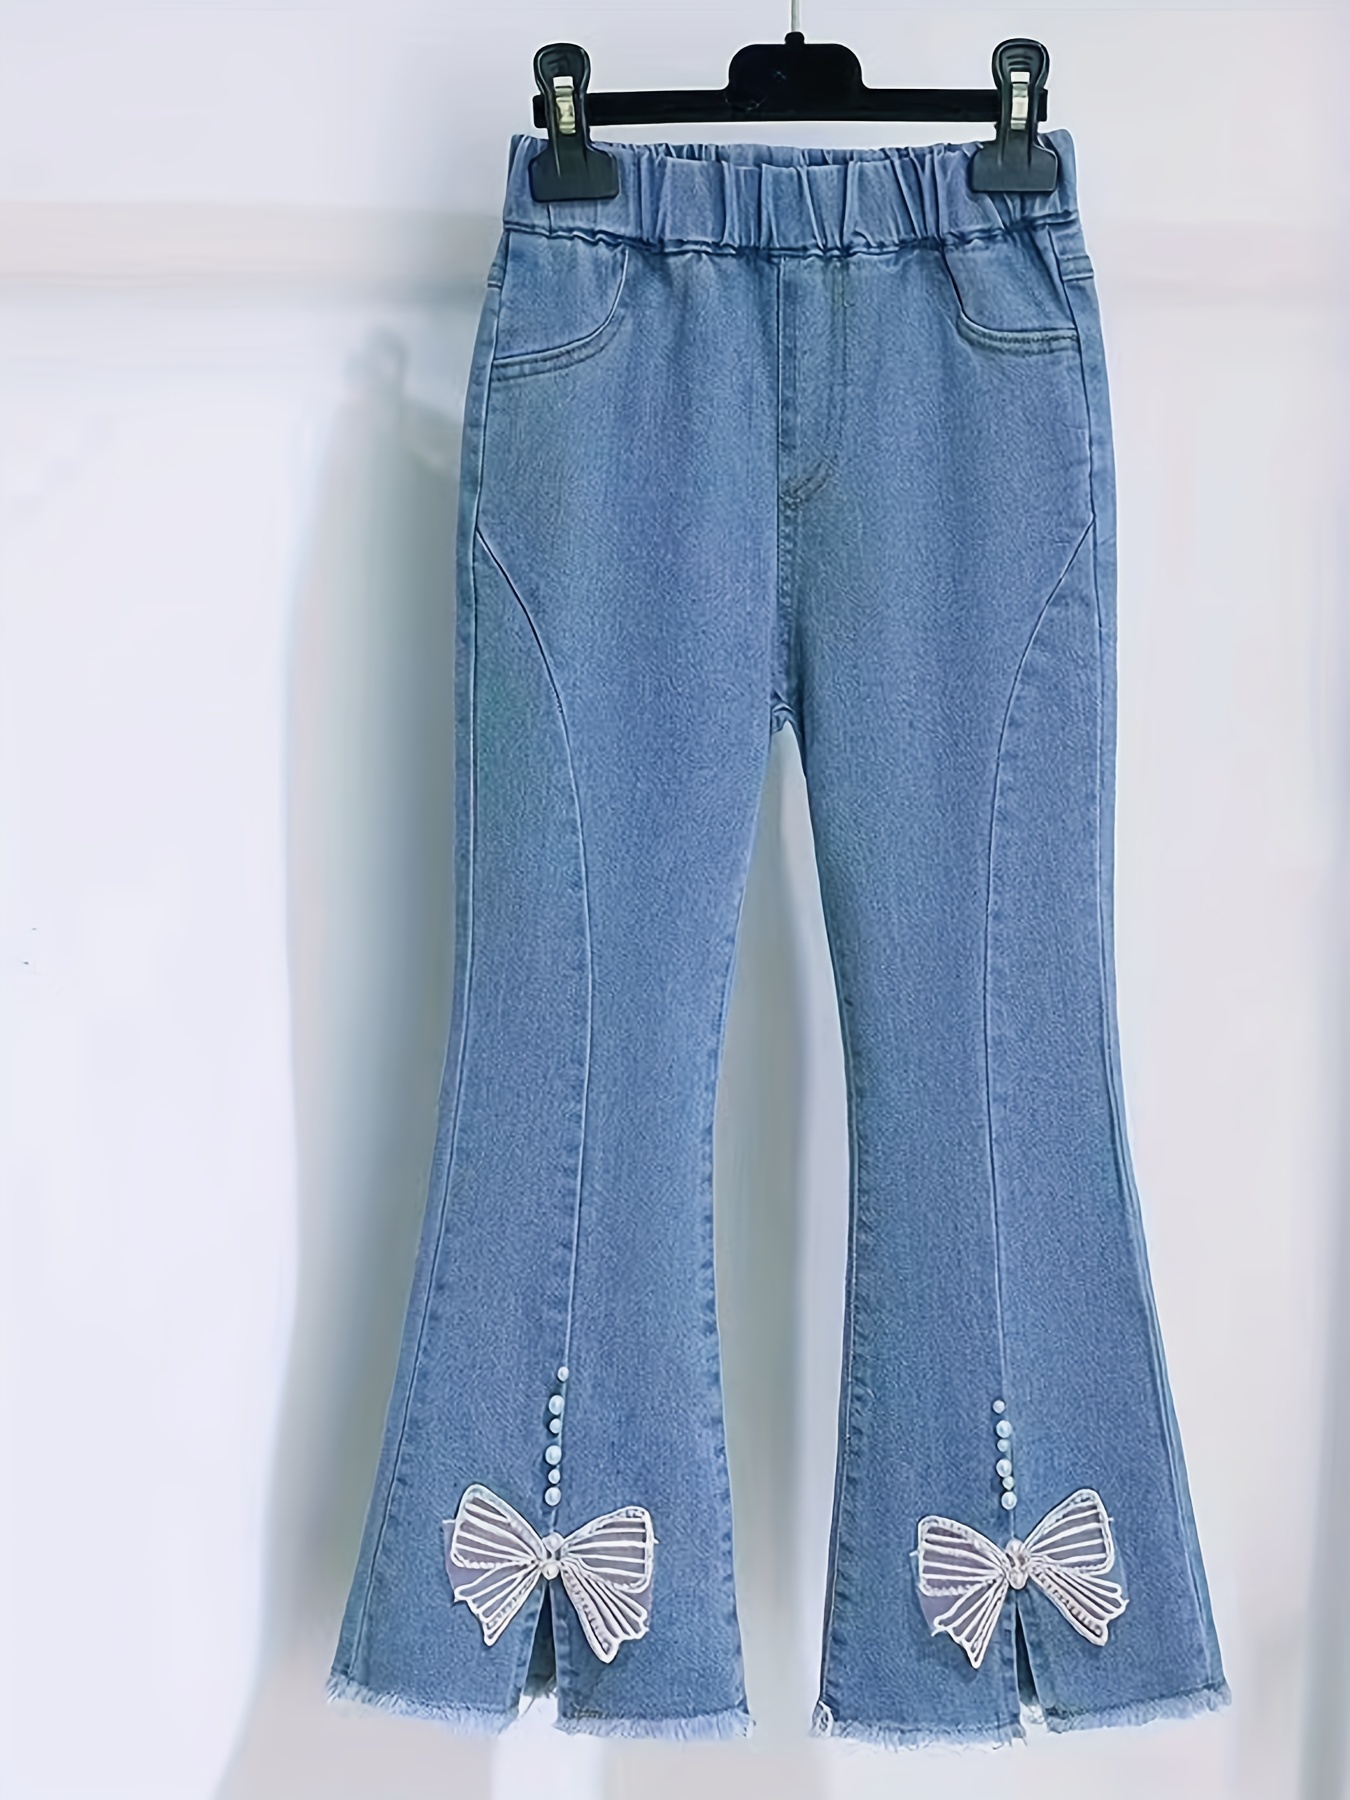 Kids Girls Casual Jeans Long Bell-Bottom Pants Lace Hem Denim